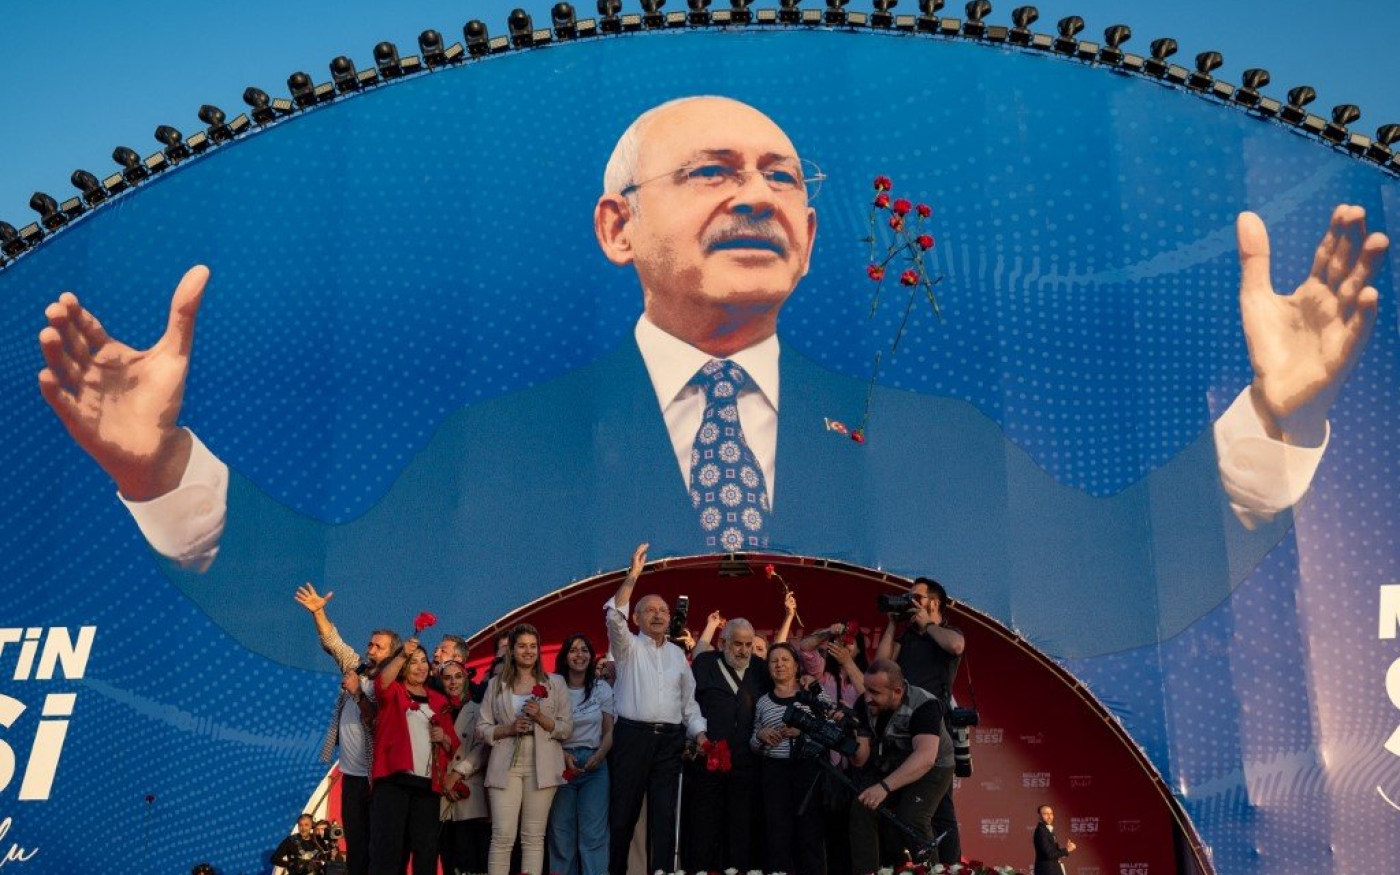 Kemal Kılıçdaroğlu, leader du CHP, participe à un meeting à Istanbul (Turquie), le 21 mai 2022 (AFP)